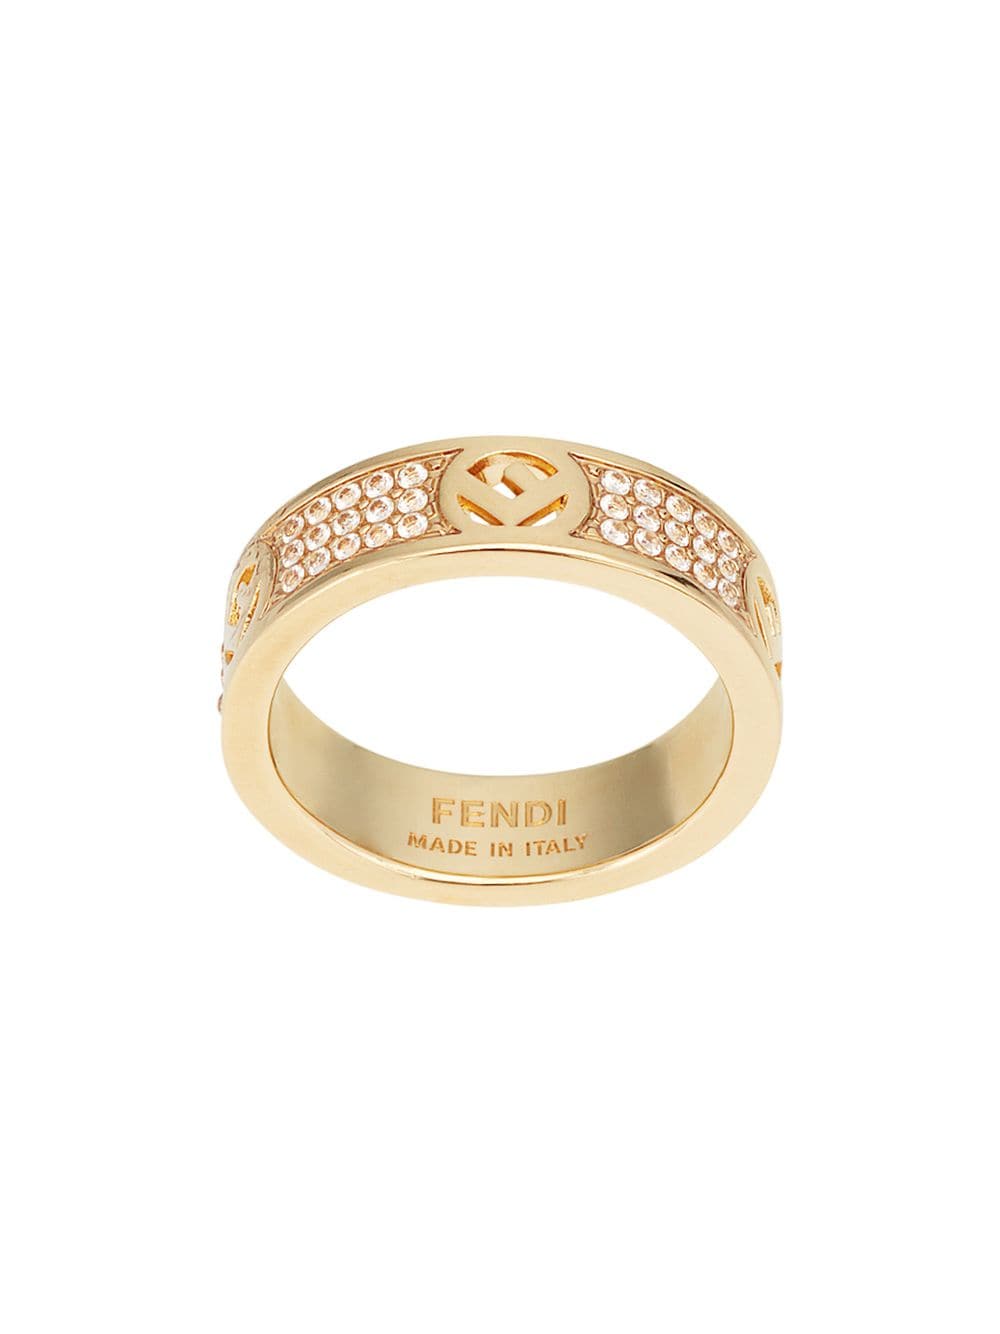 фото Fendi декорированное кольцо с монограммой